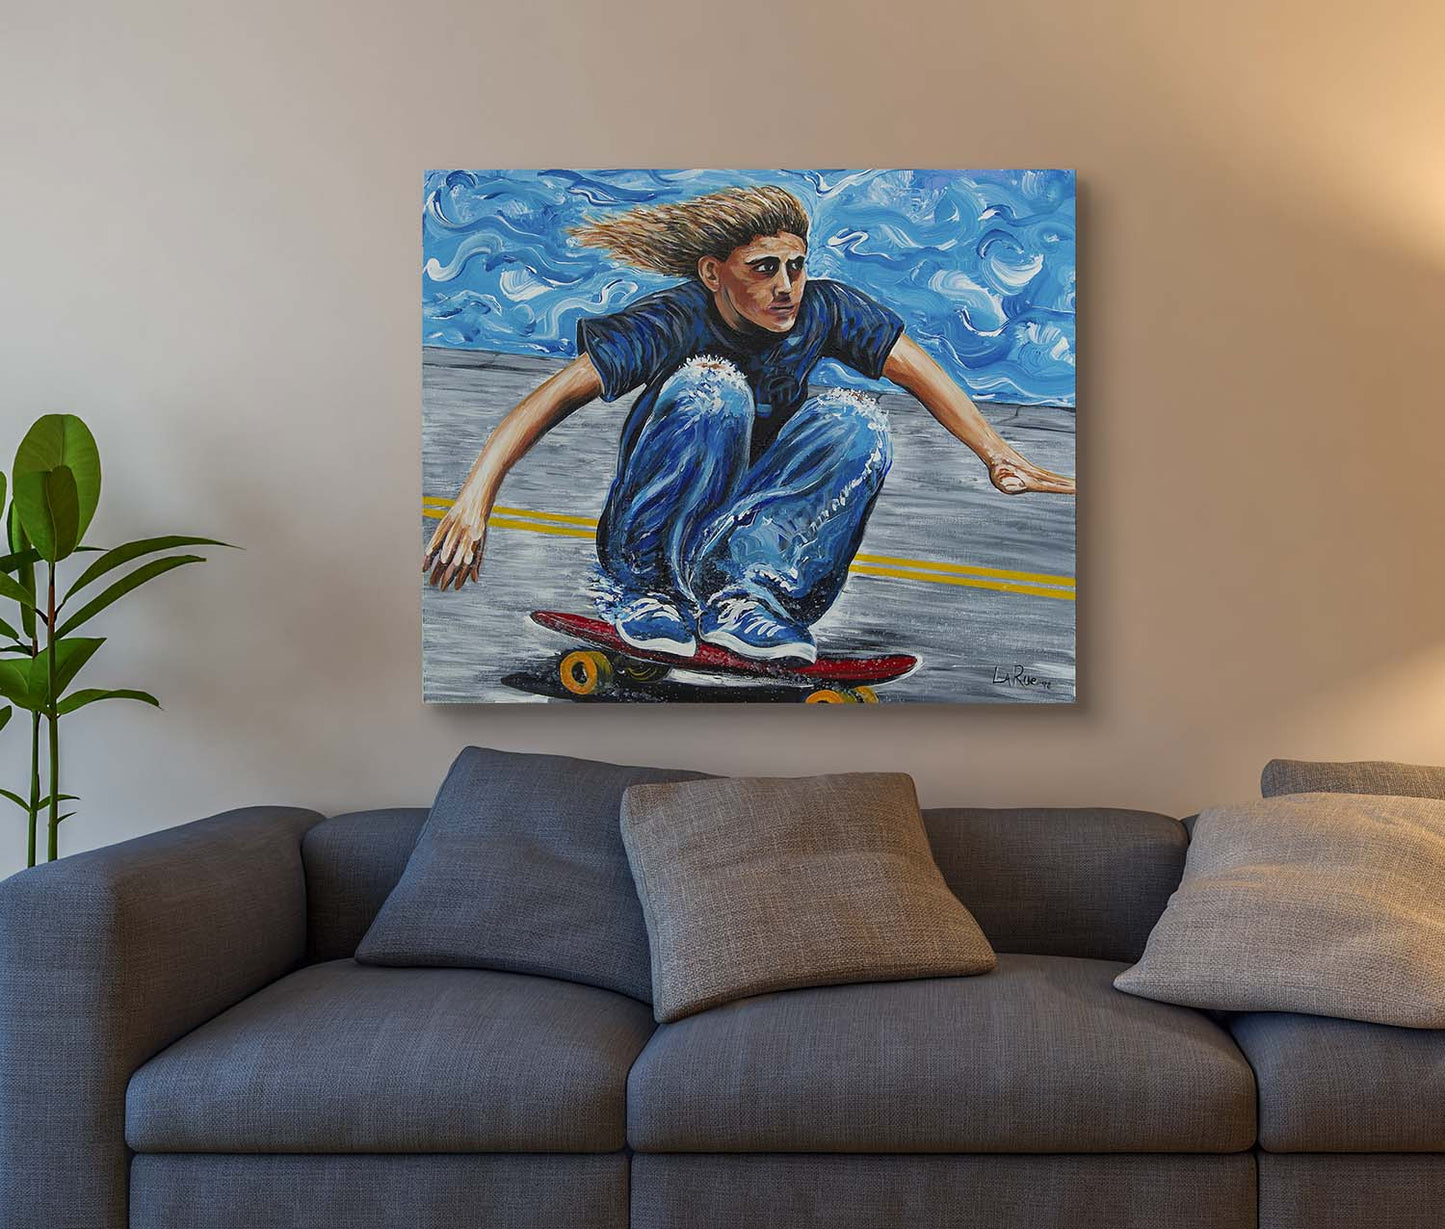 Zephyr Skates acrylic canvas painting by Doug LaRue